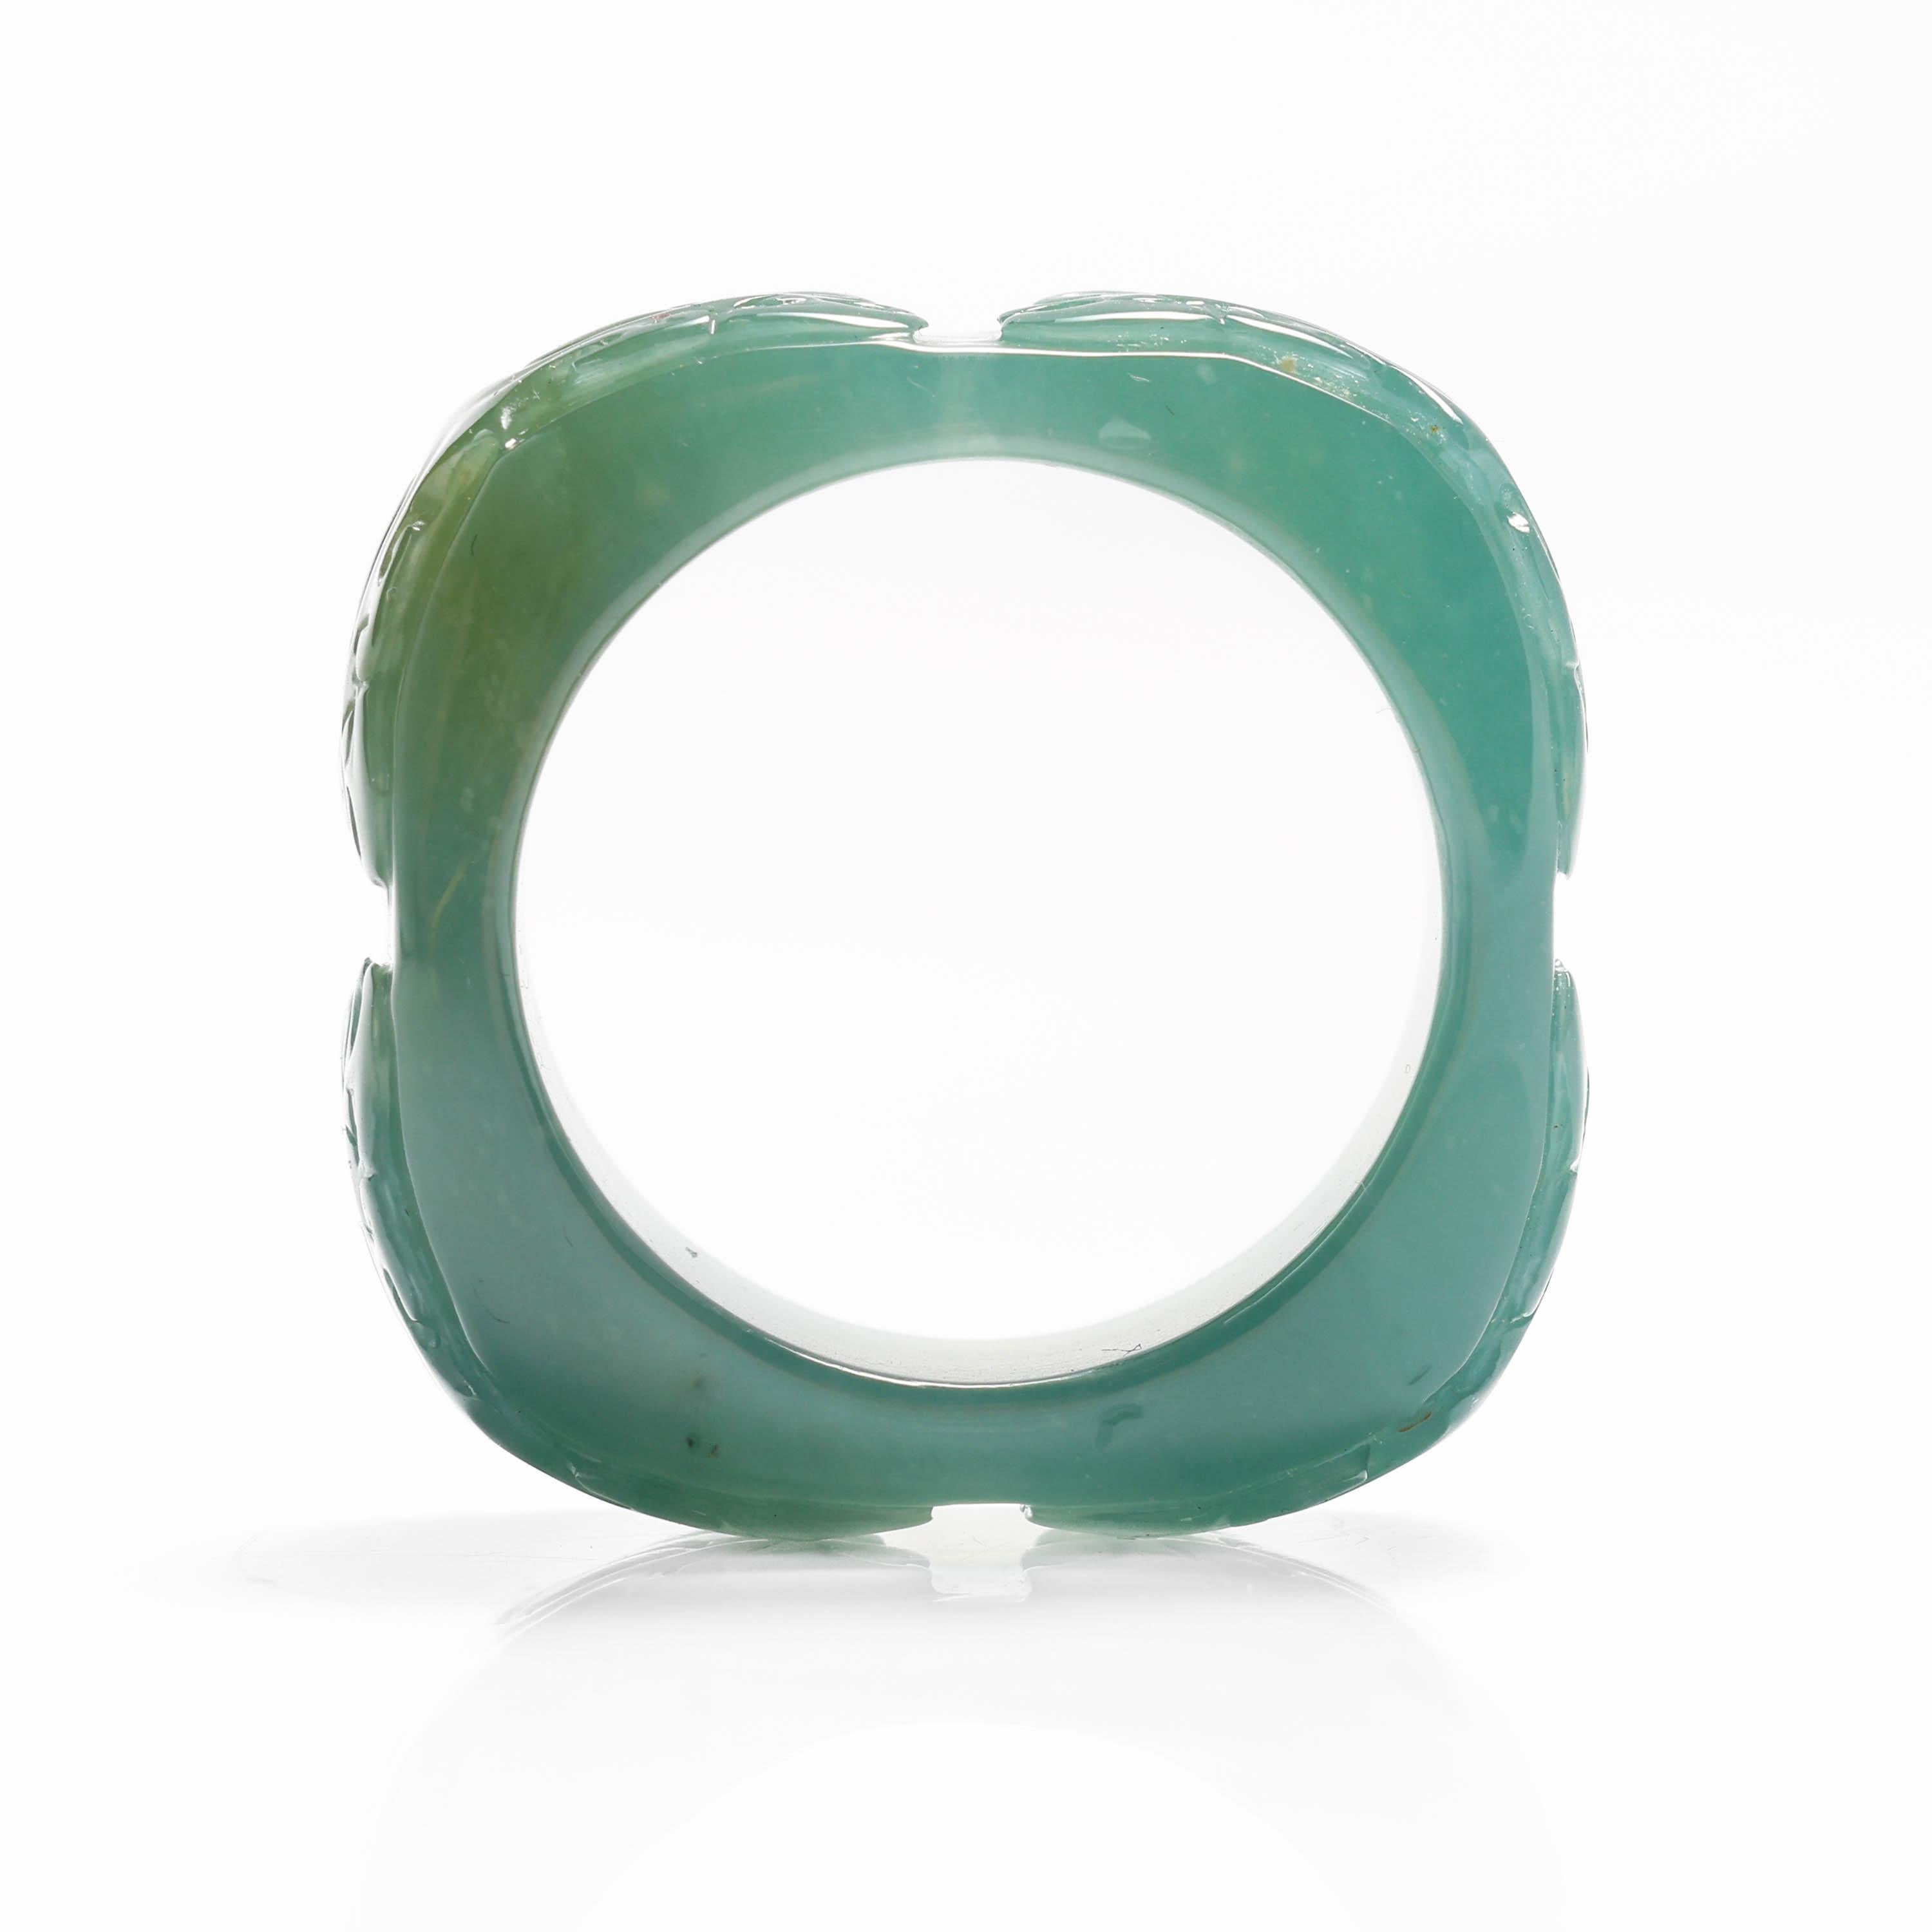 jade carved ring